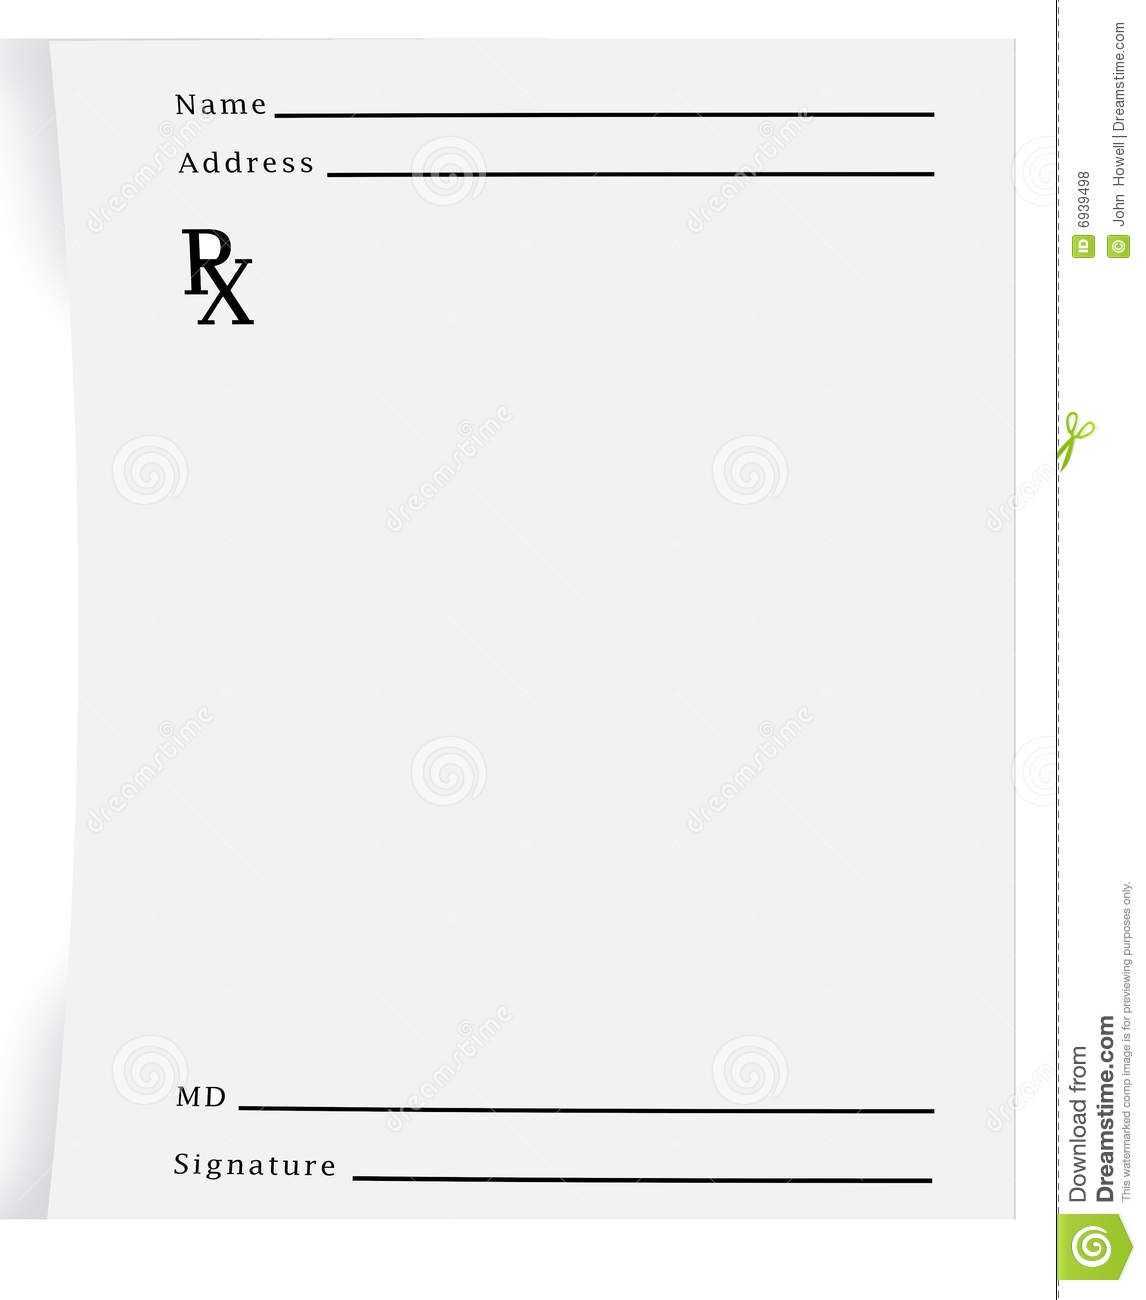 019 Prescription Pad Template Microsoft Word Staggering With Regard To Doctors Prescription Template Word